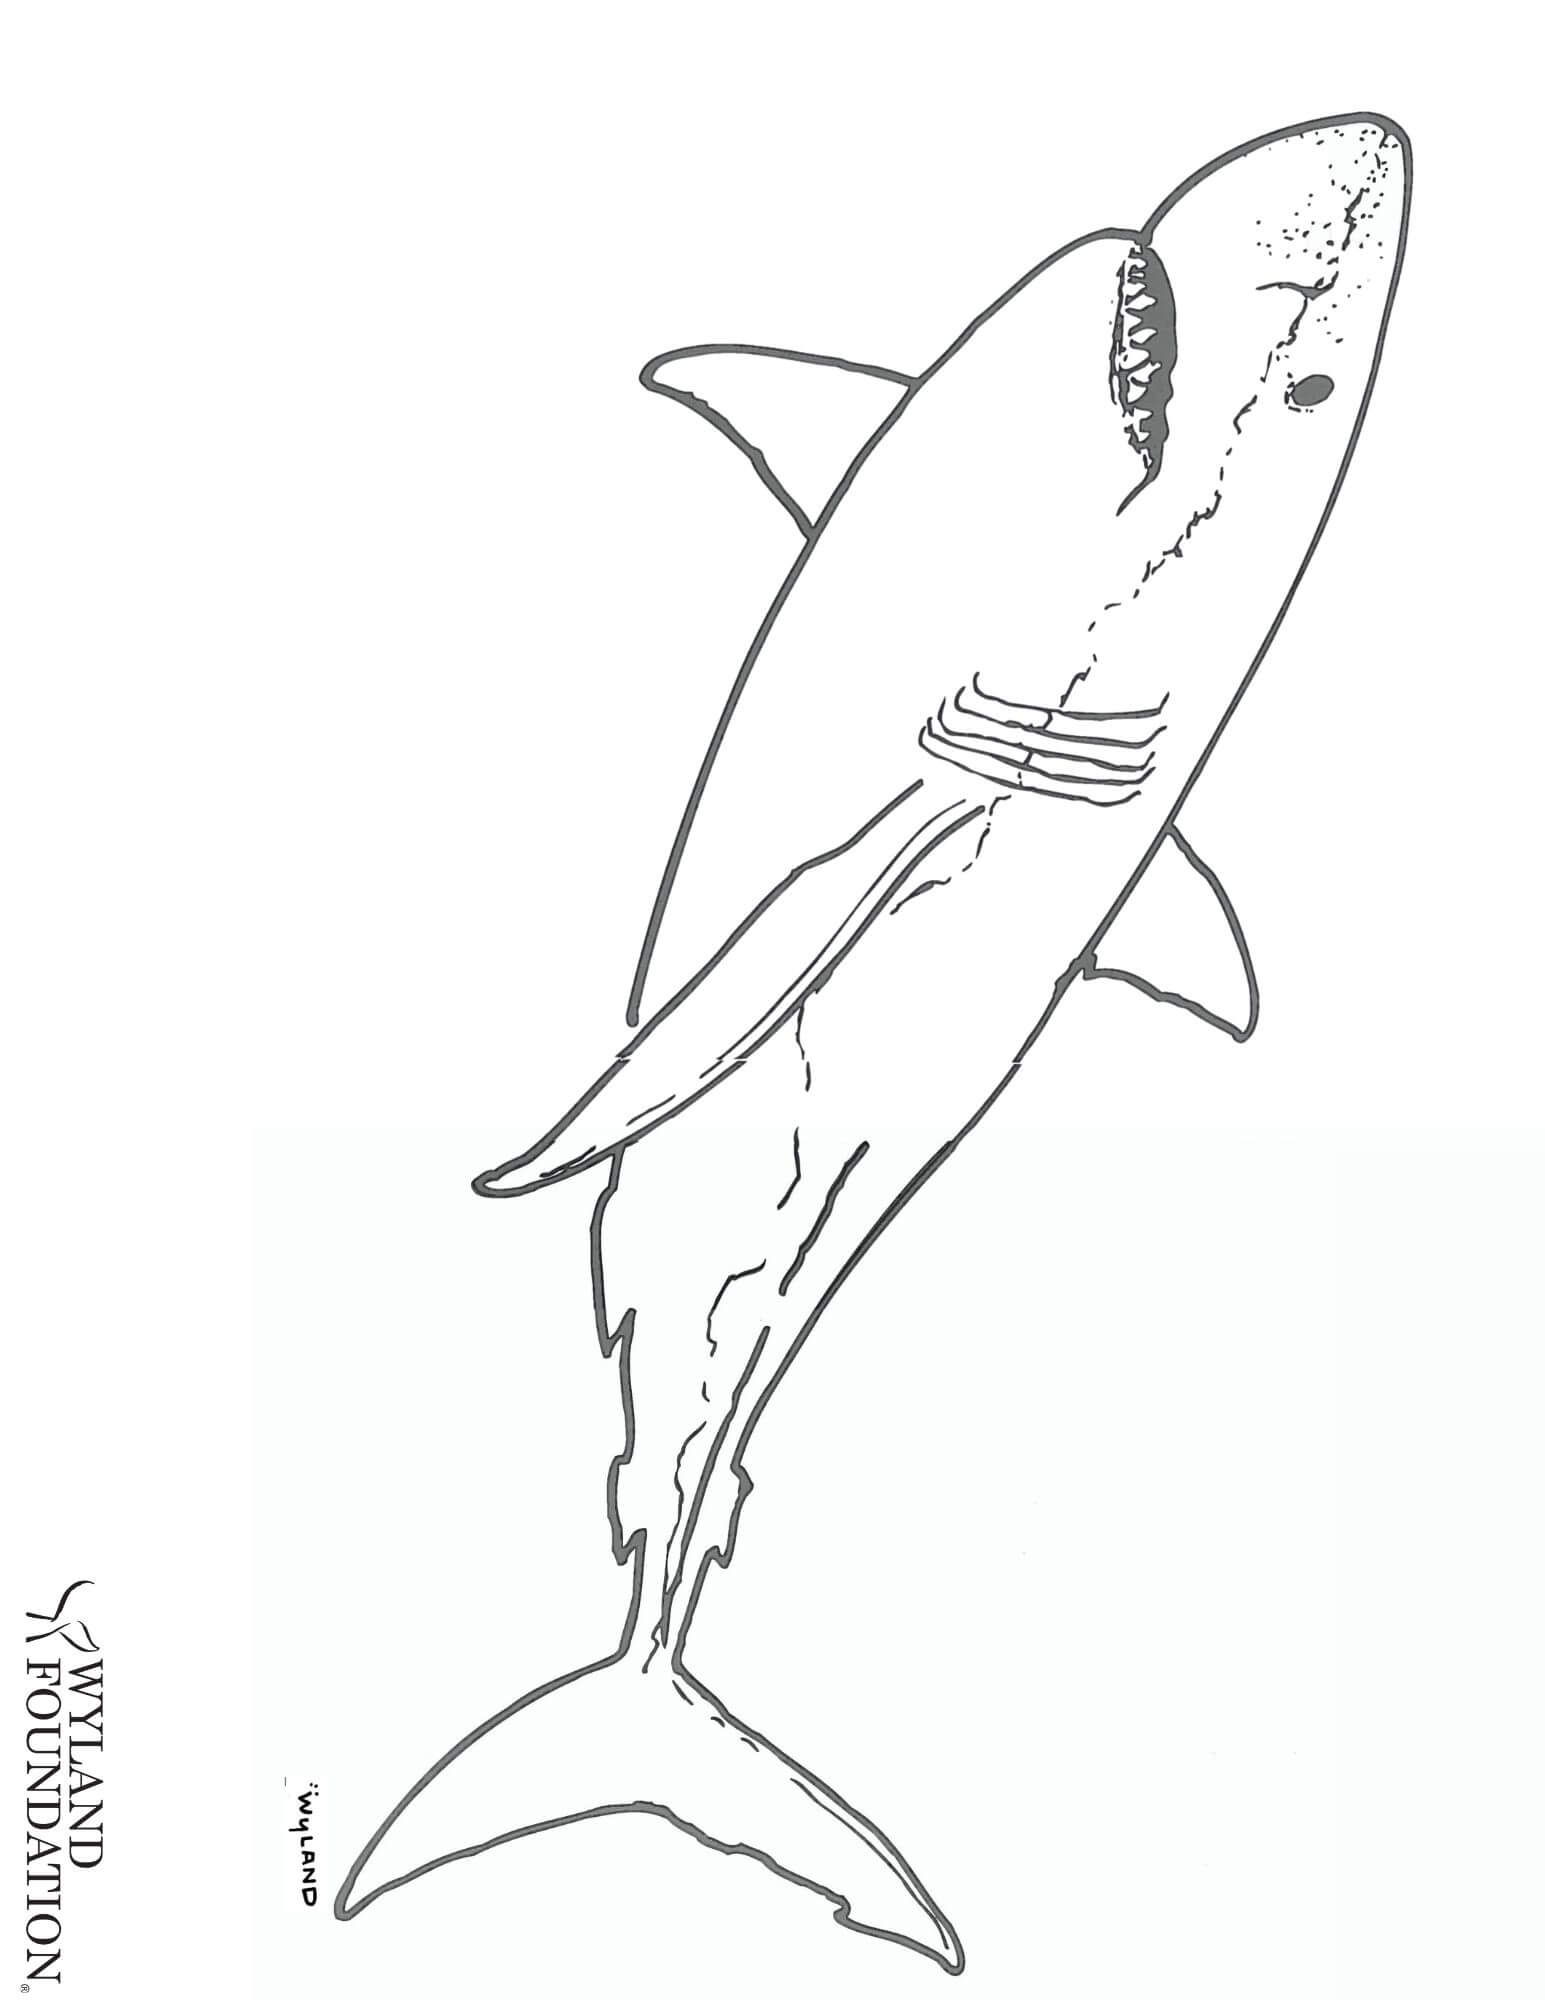 Great White Shark - A Giant Predator - FREE Download! - Wyland Foundation